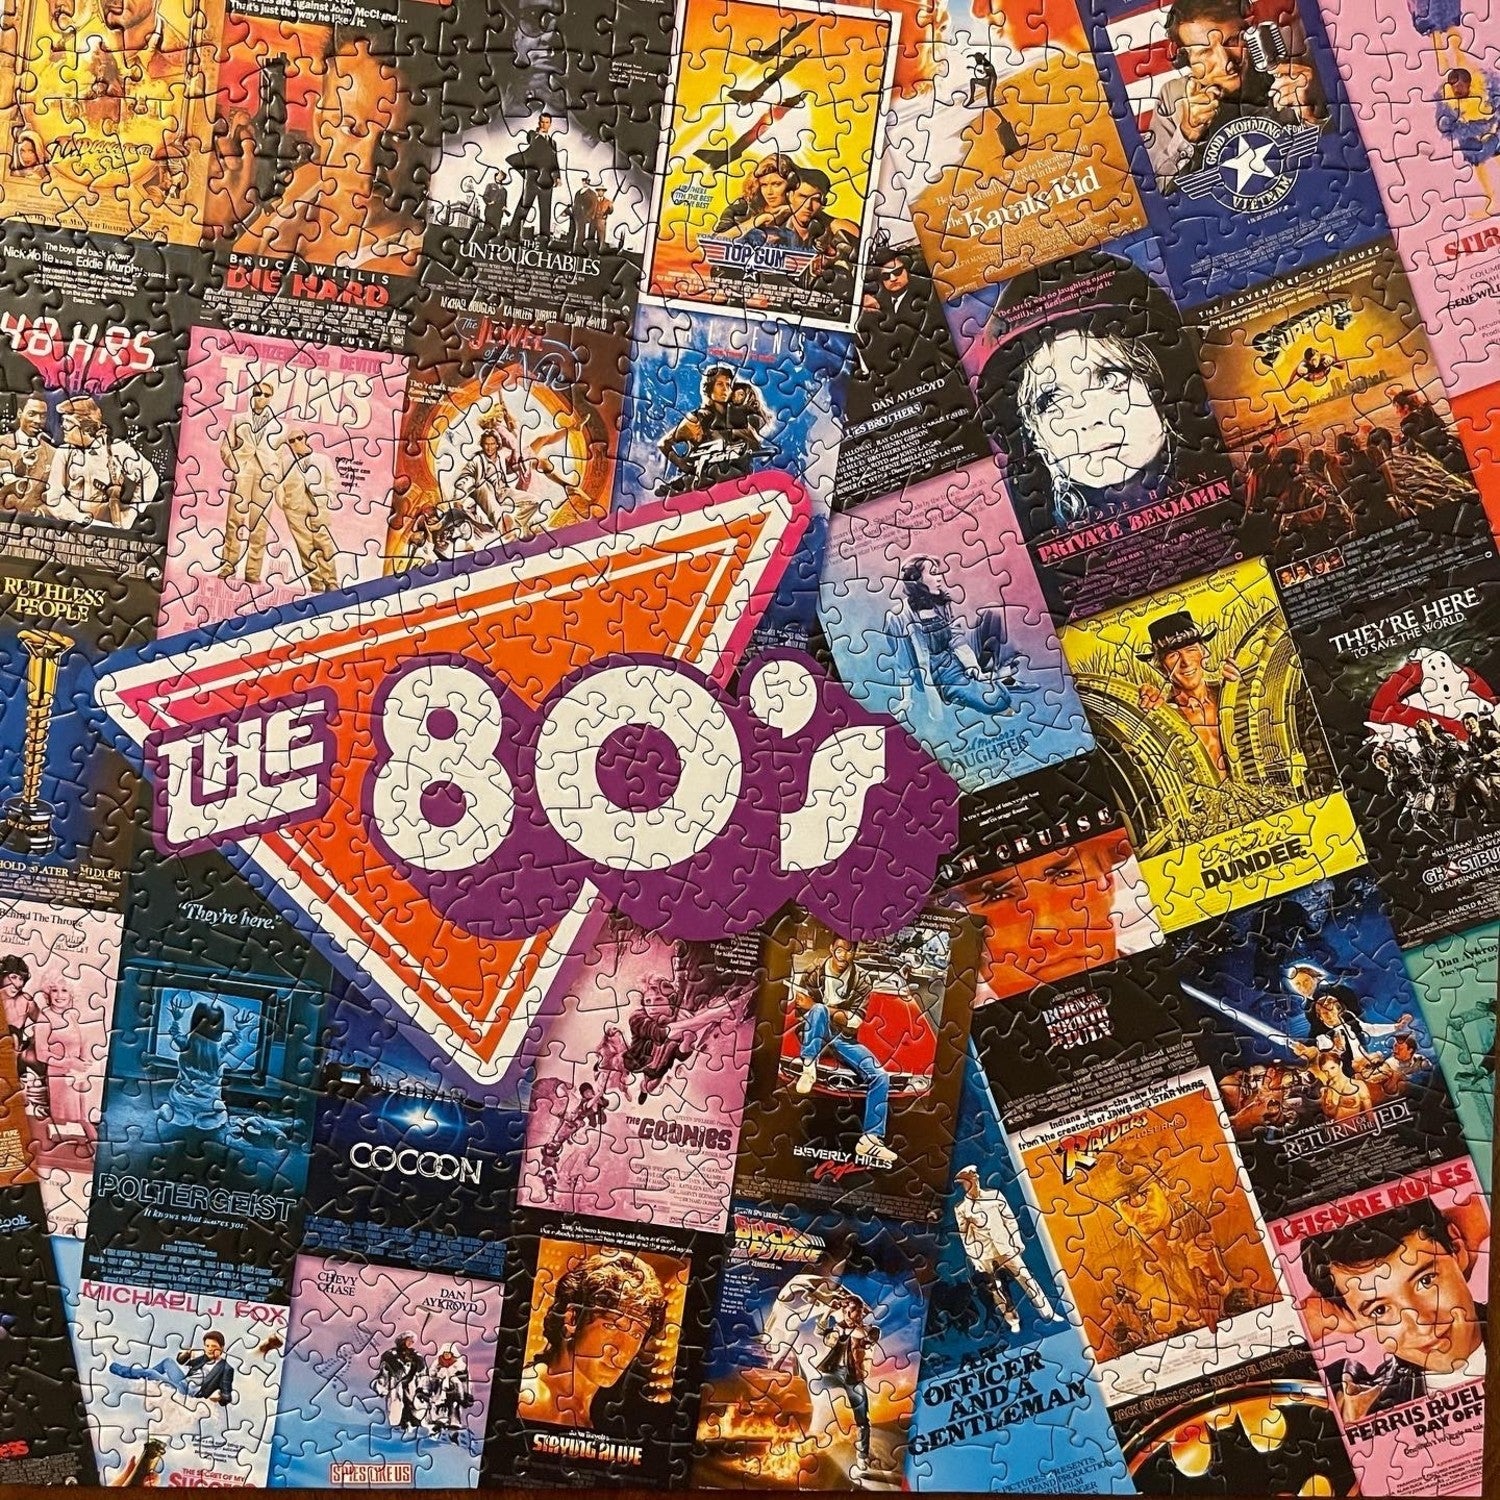 80's Blockbusters 1000 Piece Jigsaw Puzzle